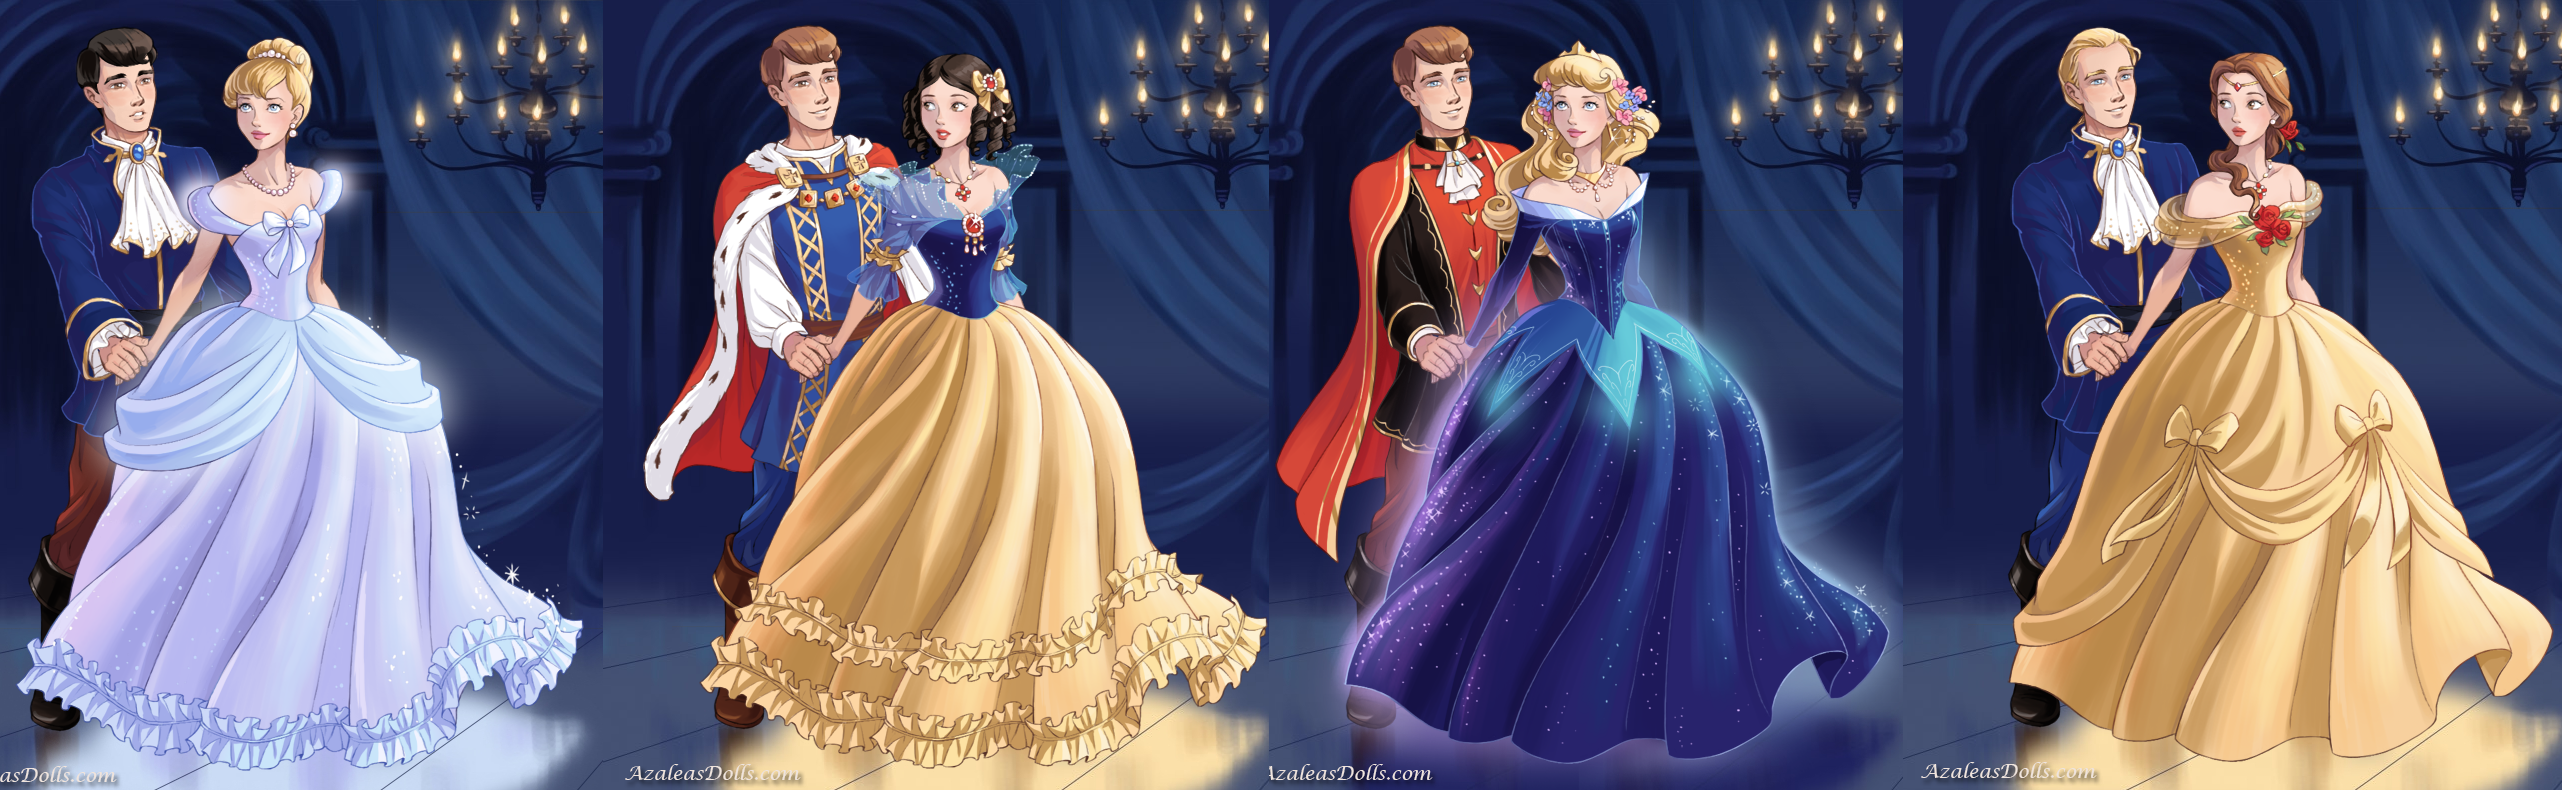 AzaleasDolls Game of Thrones - Disney Princess 3 by CheshireScalliArt on  DeviantArt